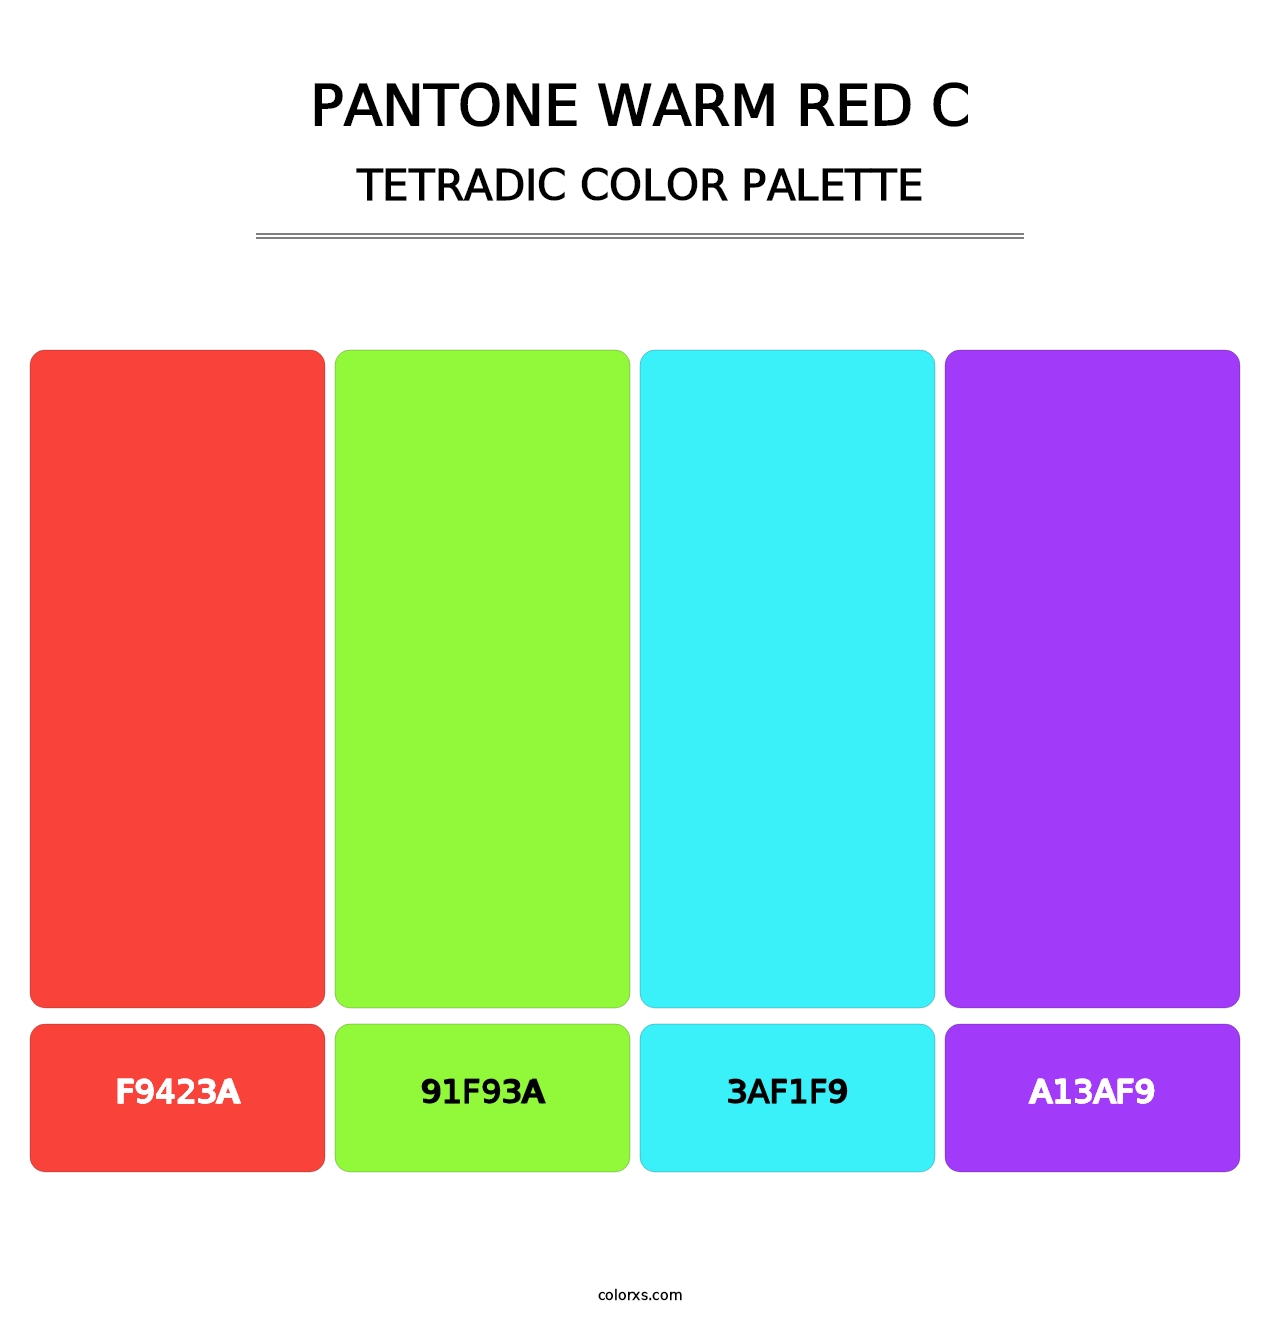 PANTONE Warm Red C - Tetradic Color Palette